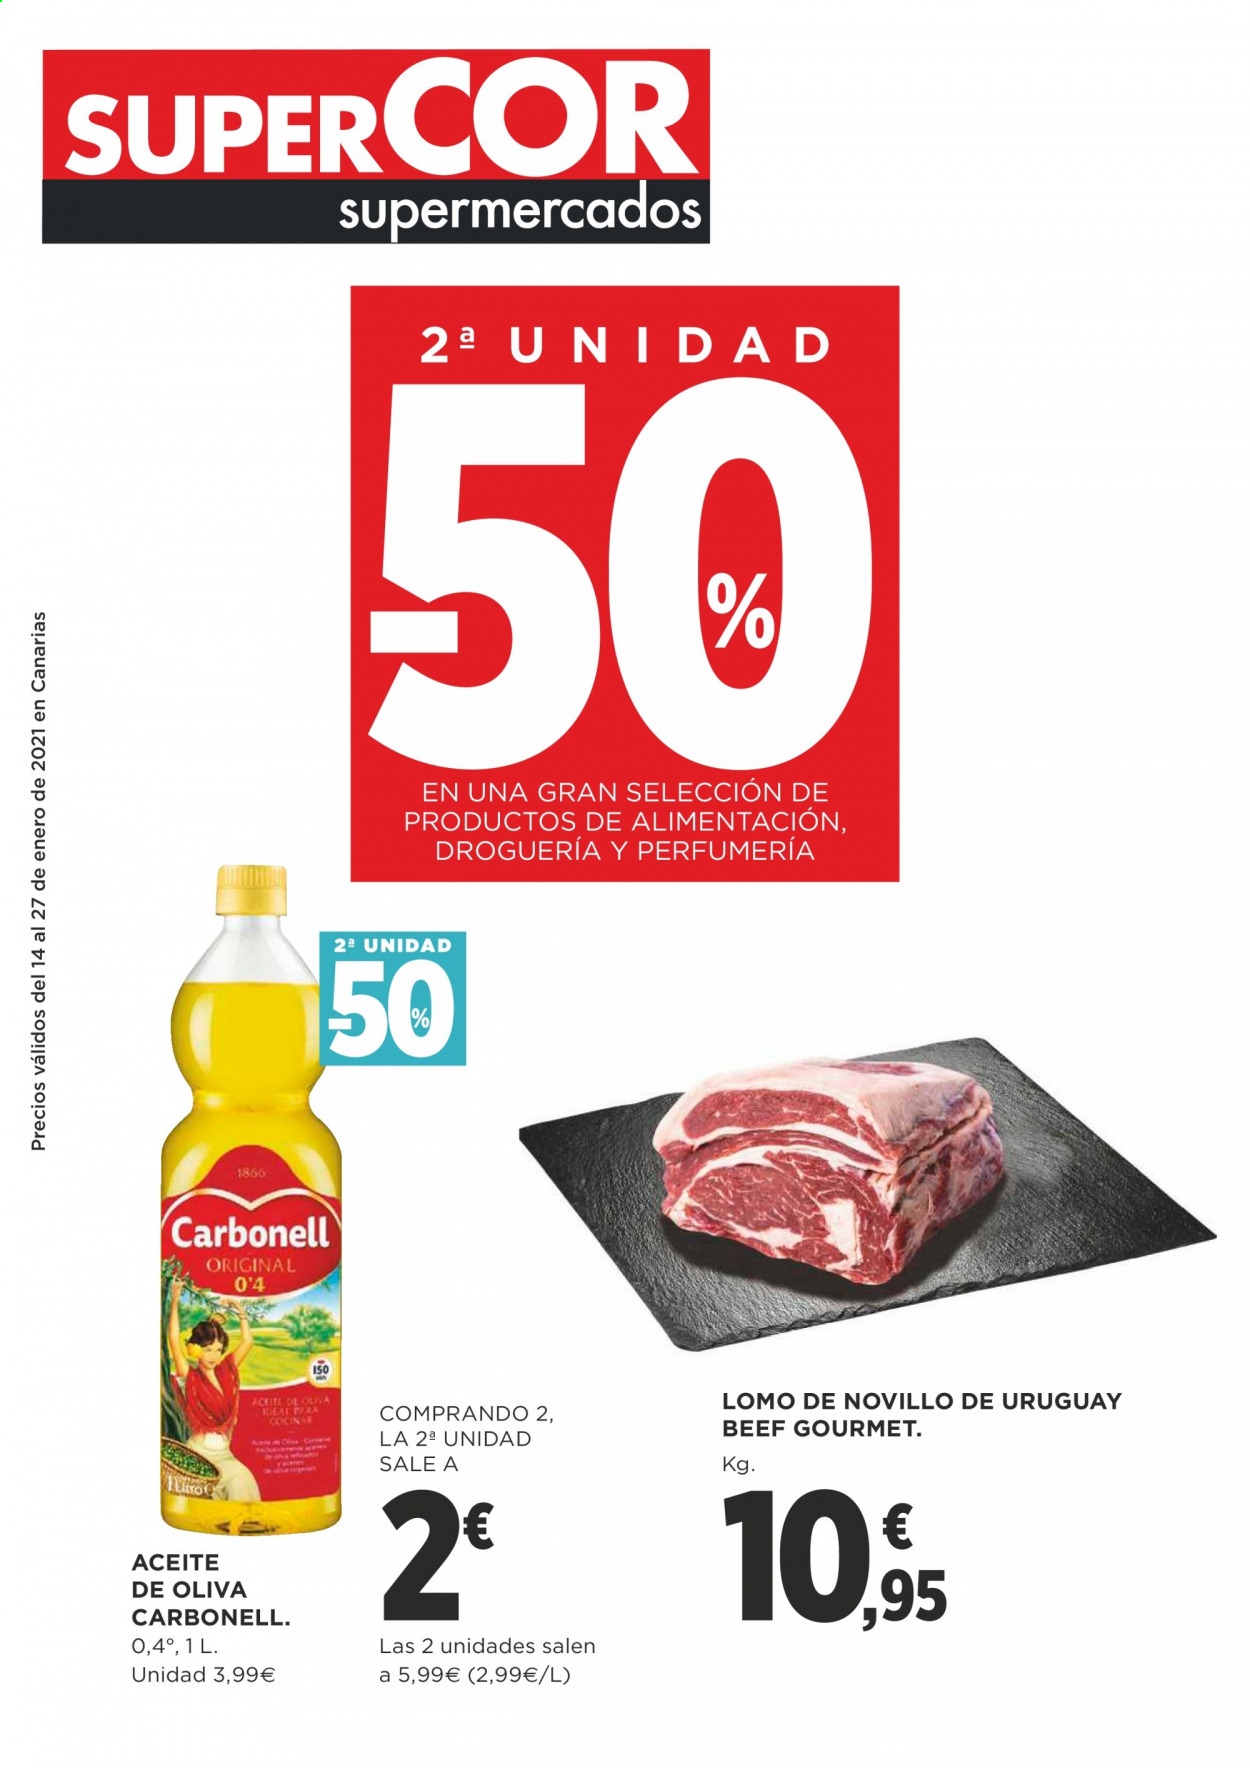 thumbnail - Folleto actual Supercor supermercados - 14/01/21 - 27/01/21 - Ventas - lomo, Carbonell. Página 1.